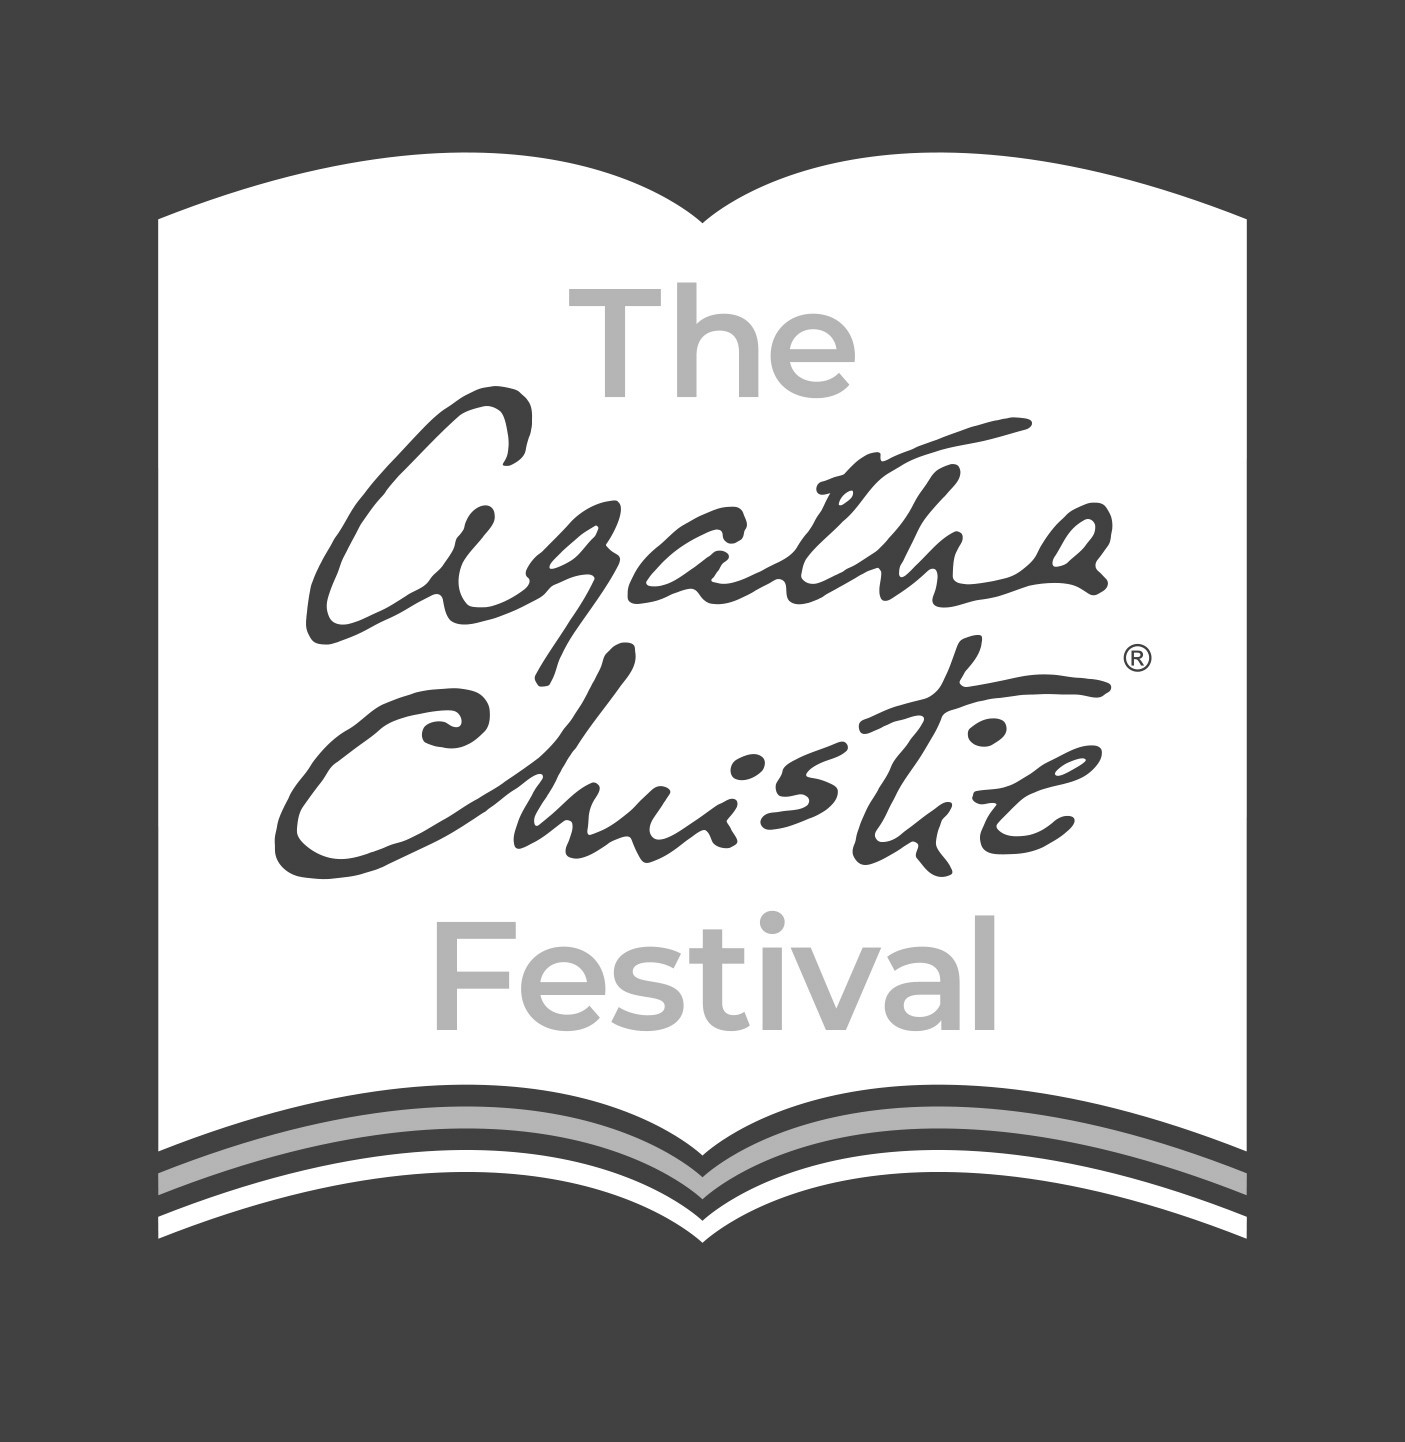 Lucy worsley’s groundbreaking new biography of Agatha Christie